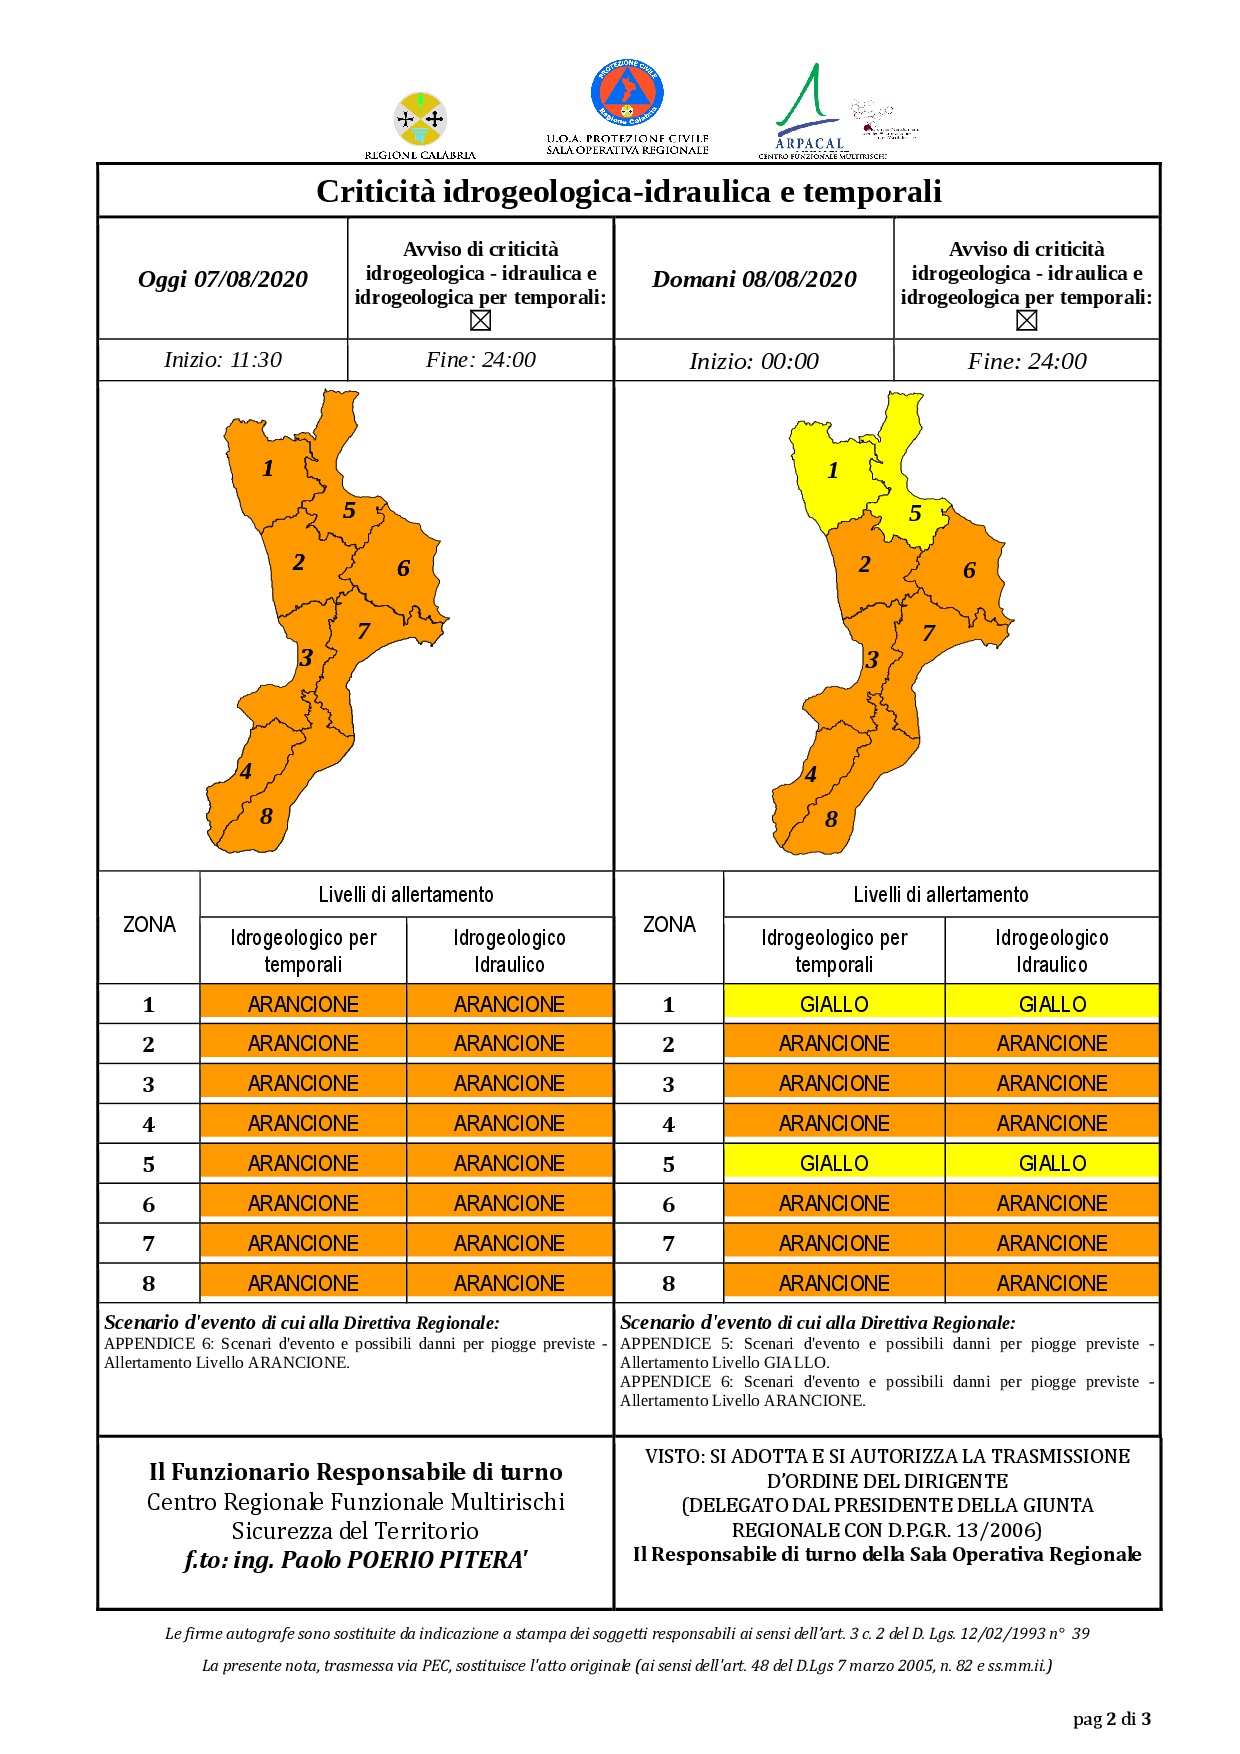 Criticità idrogeologica-idraulica e temporali in Calabria 07-08-2020